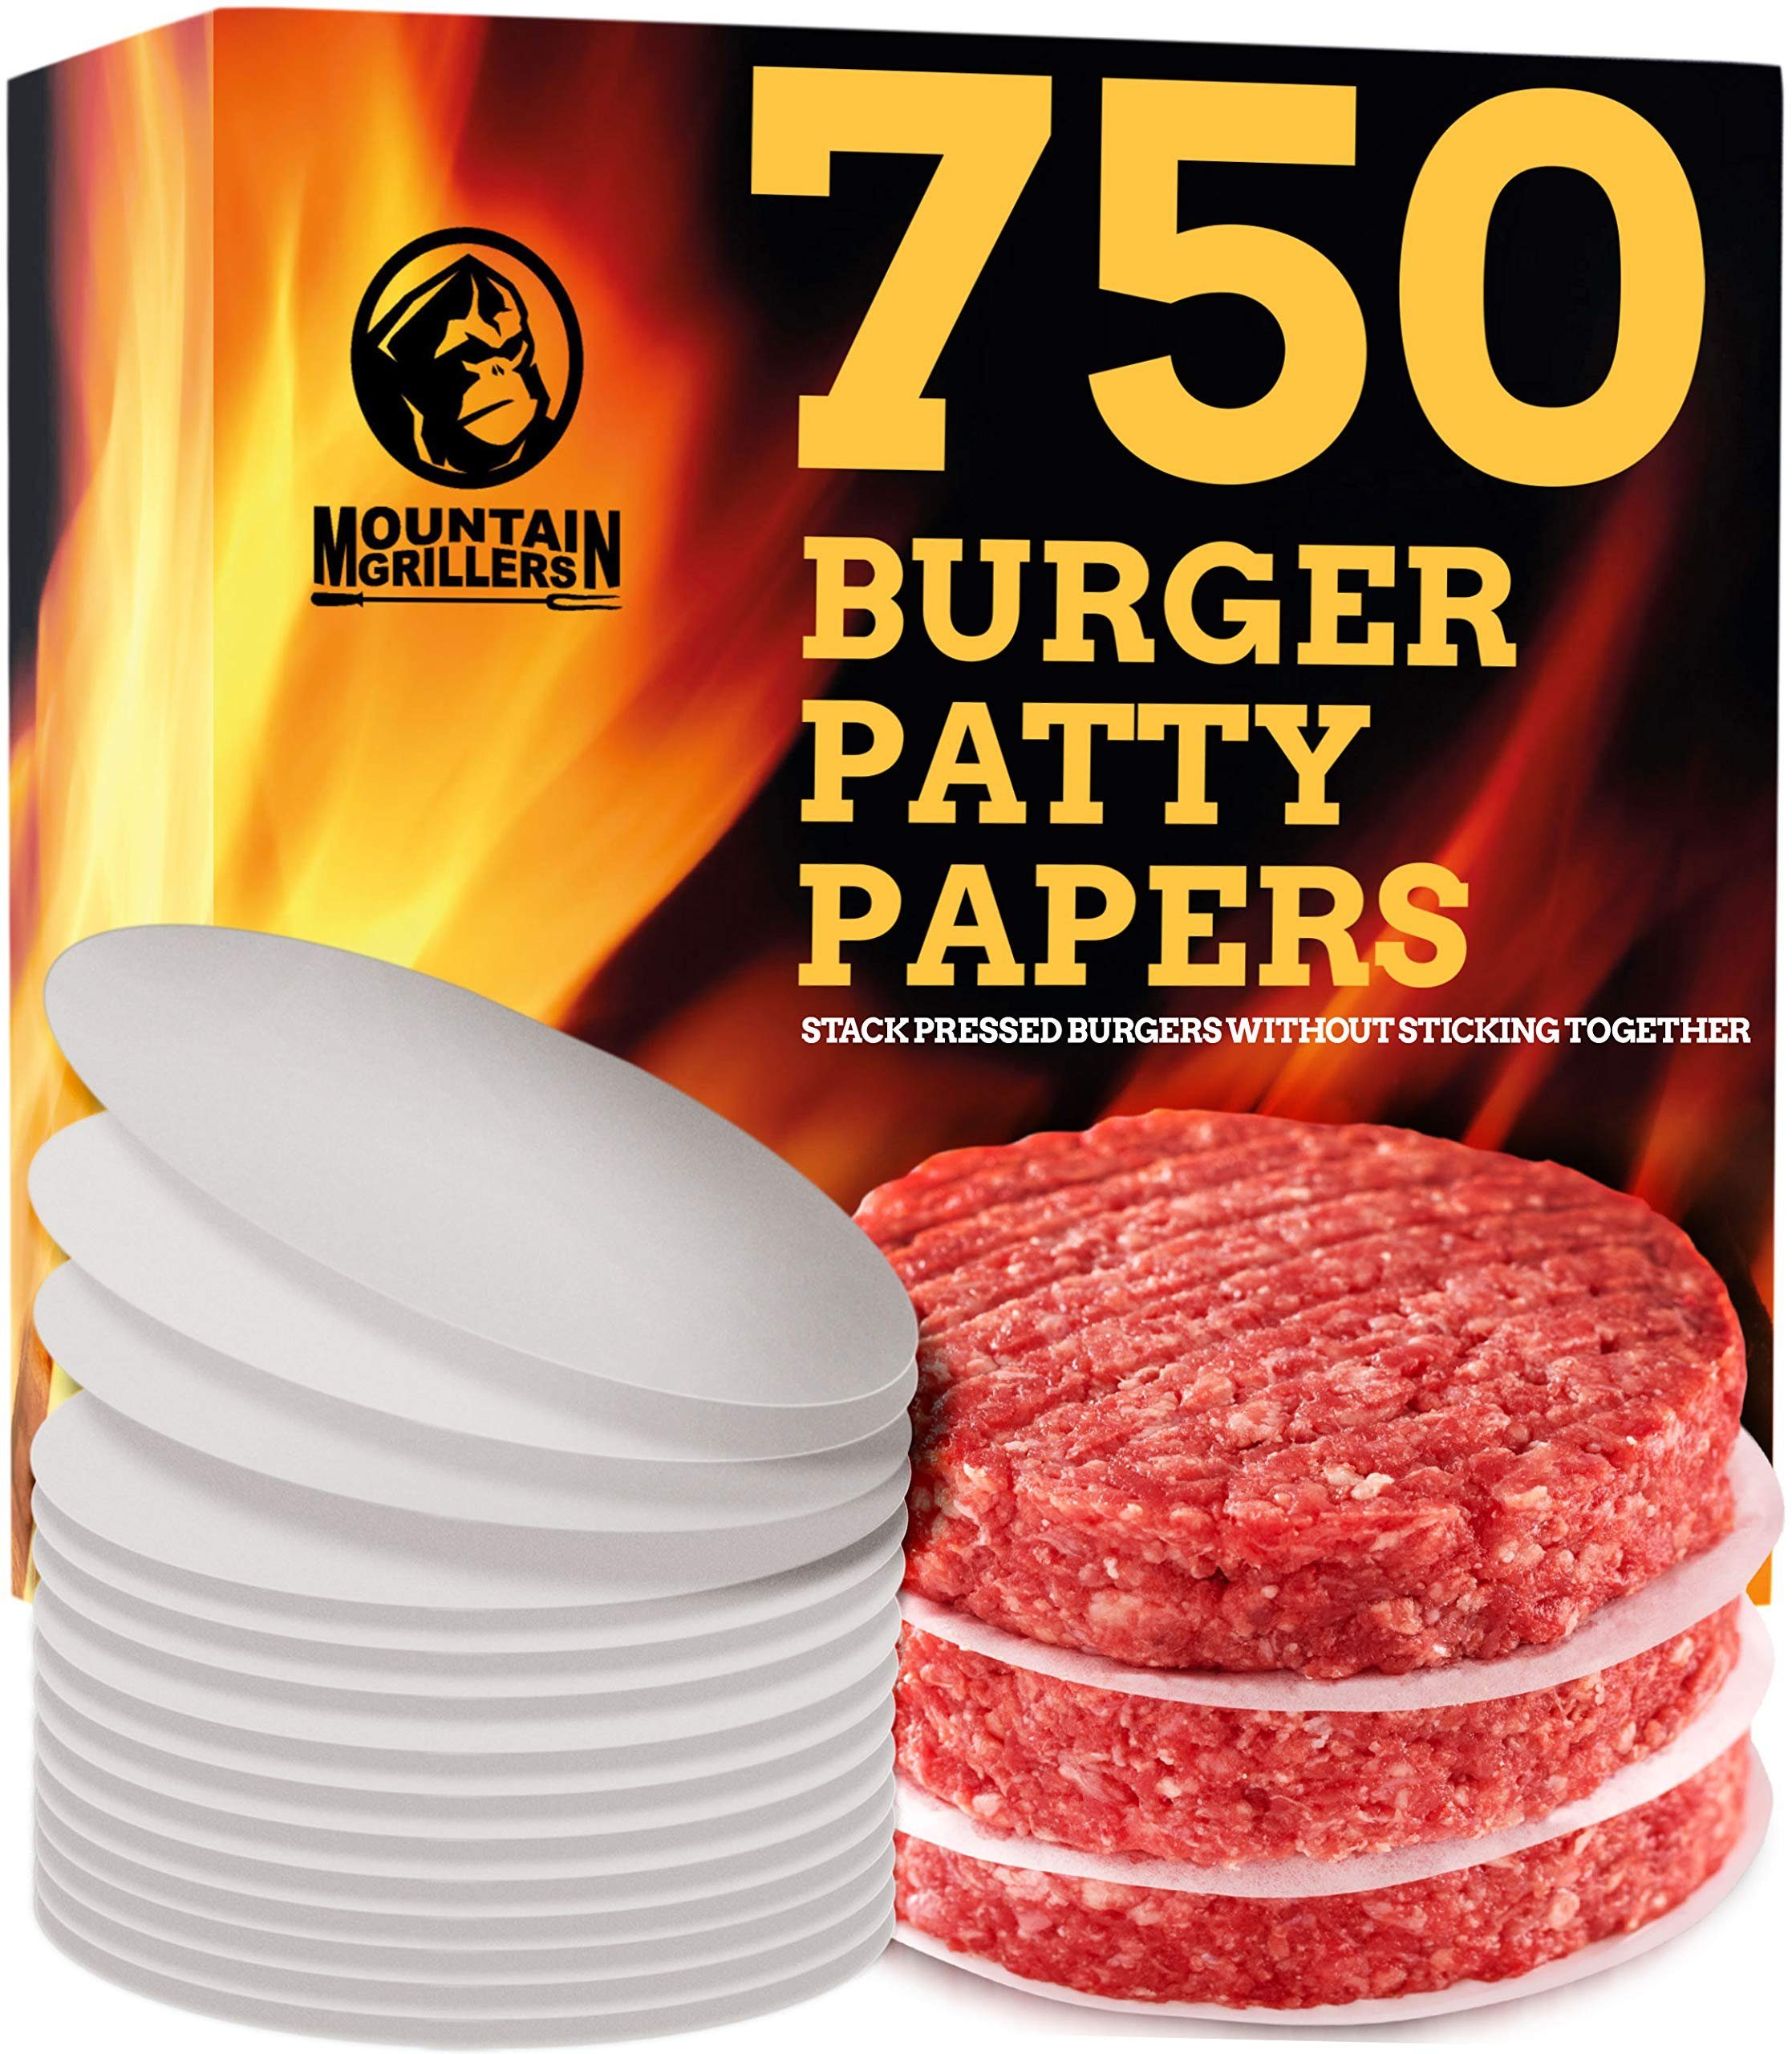 Antihaft Burger Burgerpresse Burgerpresse Formset, Patty Burger Papers Maker Mountain Grillers Patty Hamburger